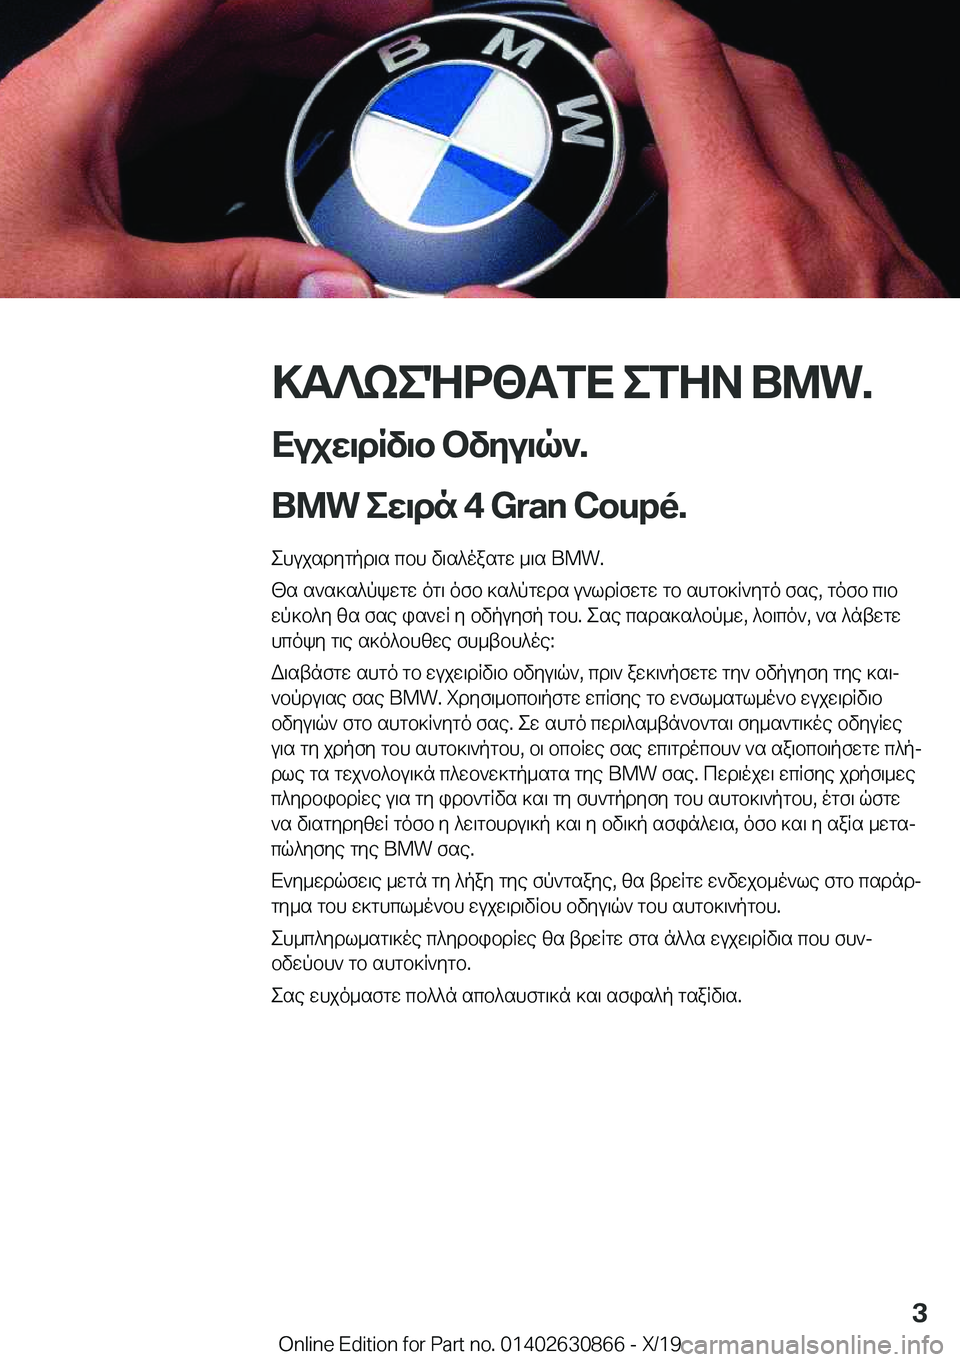 BMW 4 SERIES GRAN COUPE 2020  ΟΔΗΓΌΣ ΧΡΉΣΗΣ (in Greek) >T?keNd<TfX�efZA��B�M�W�.
Xujw\dRv\b�bvyu\q`�.
�B�M�W�ew\dn��4��G�r�a�n��C�o�u�p�